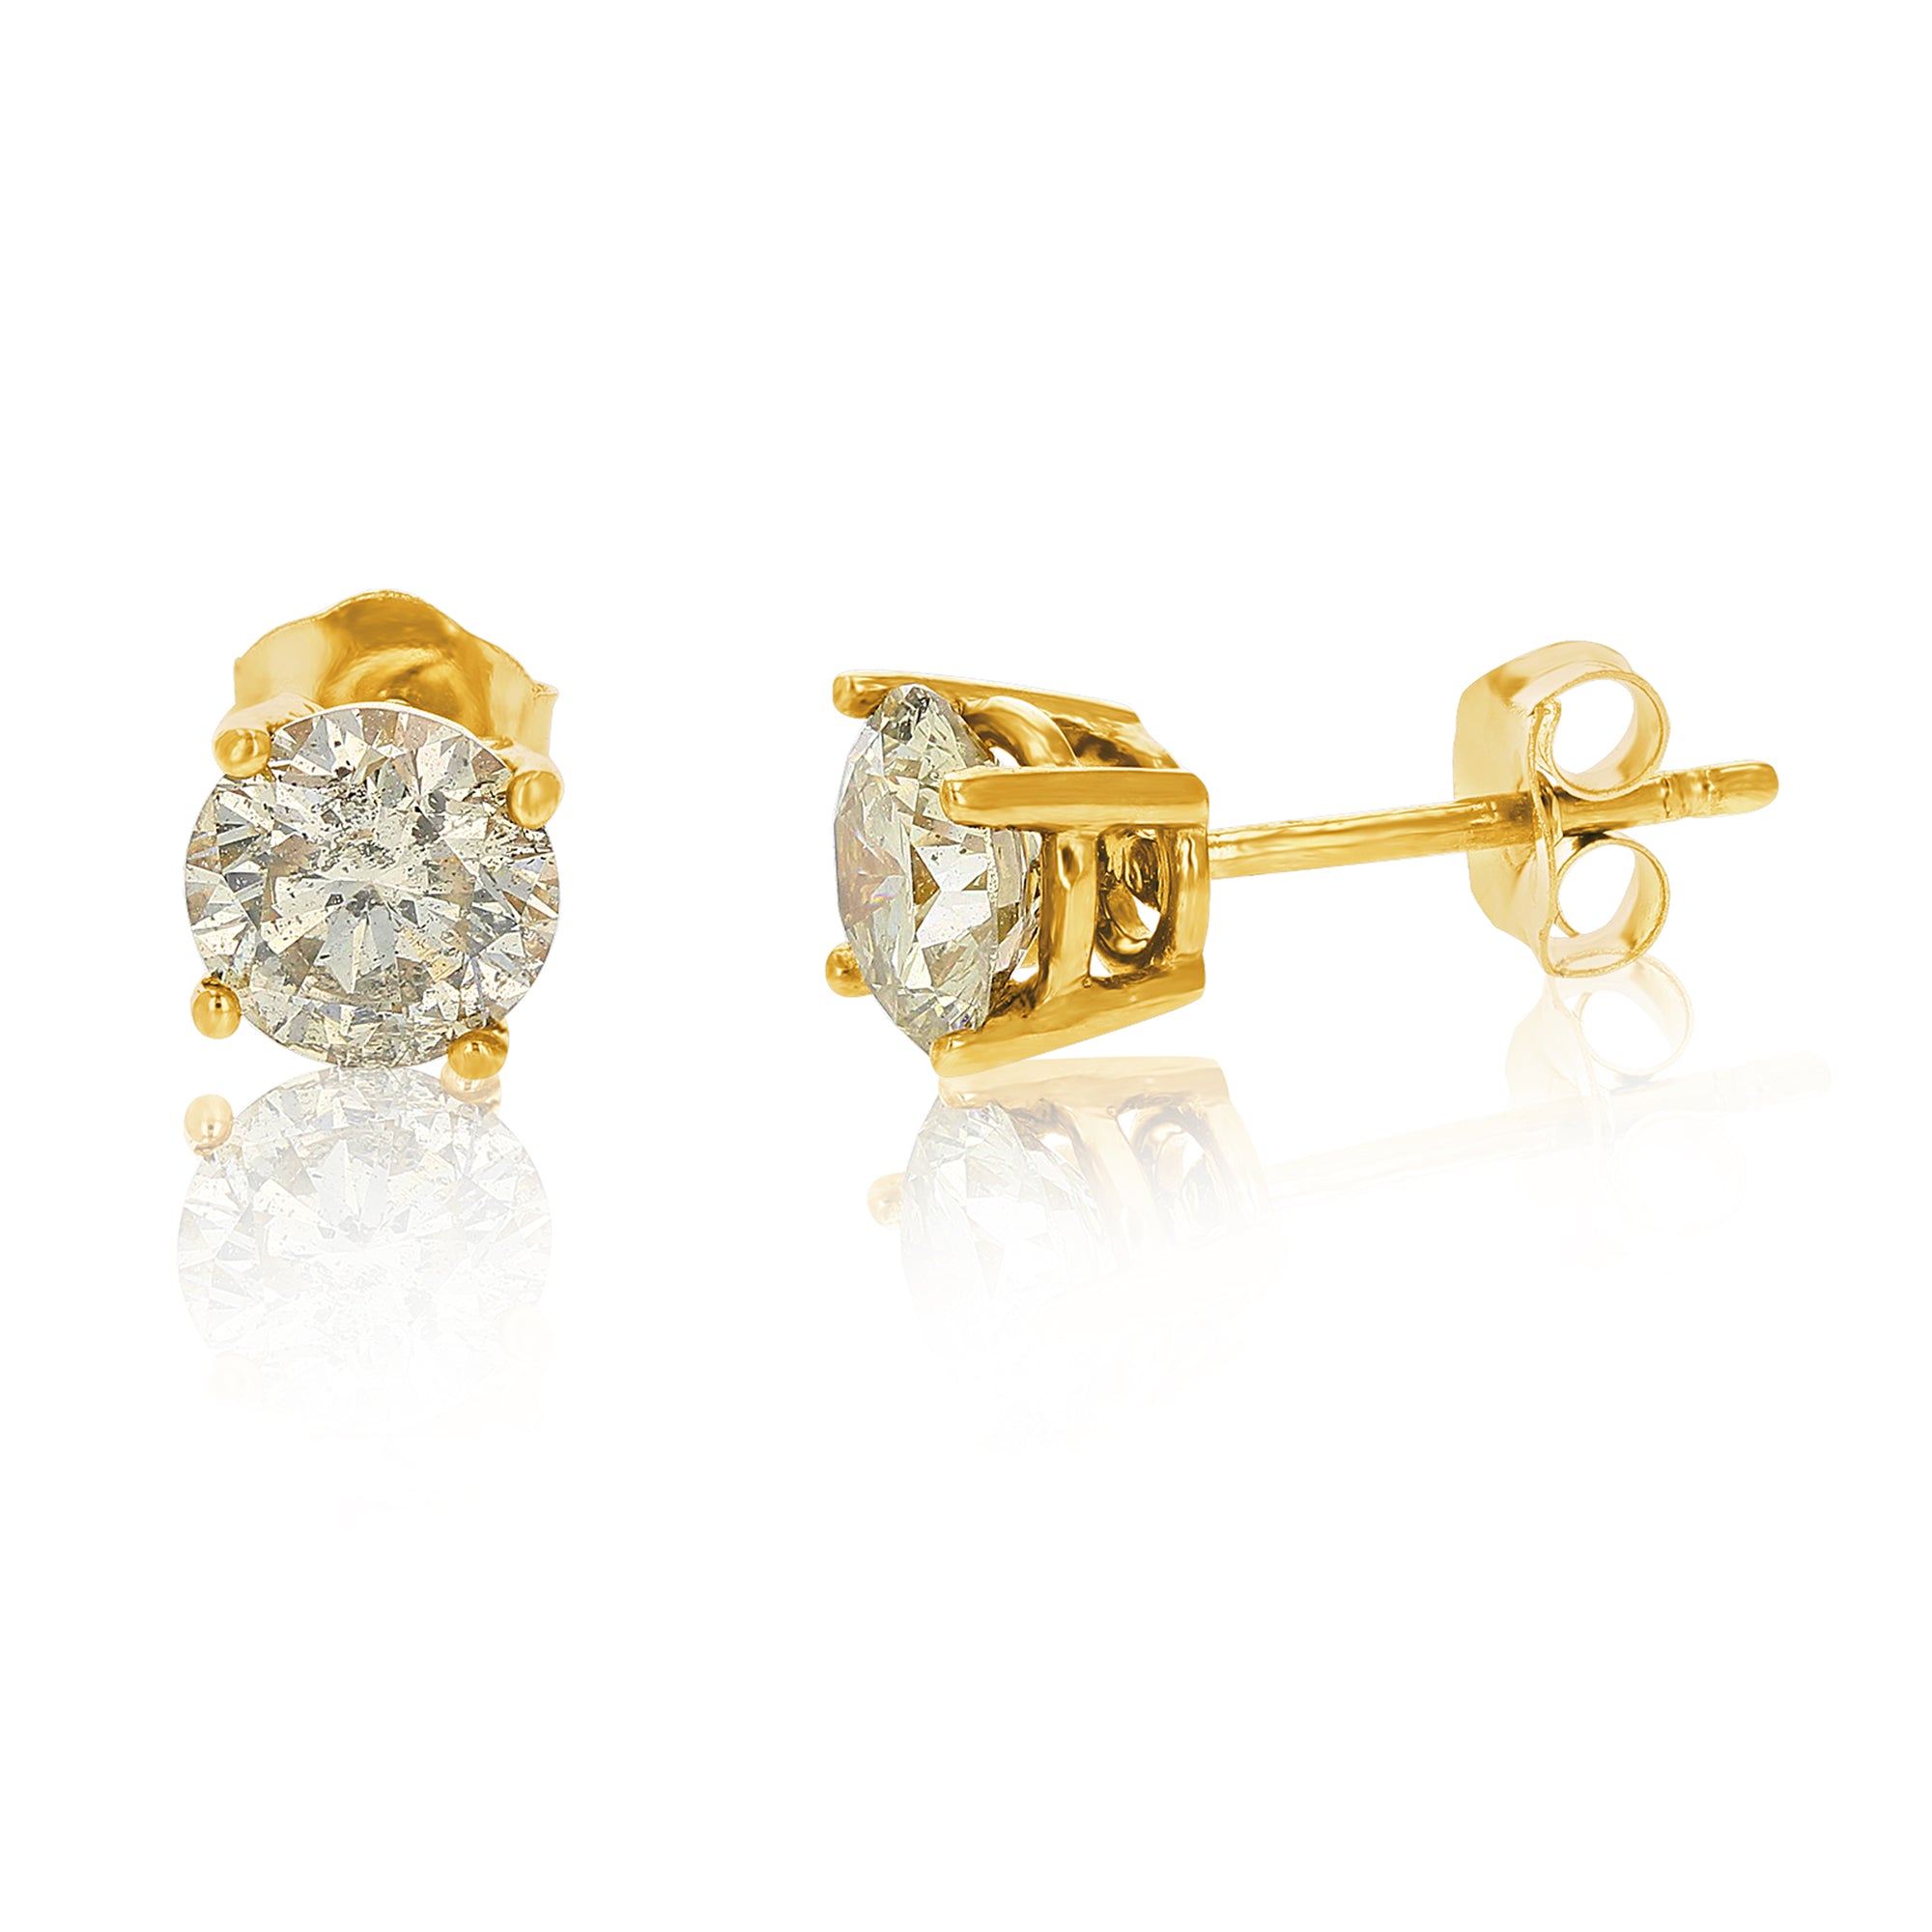 1 cttw Champagne Diamond Stud Earrings 14K Yellow Gold